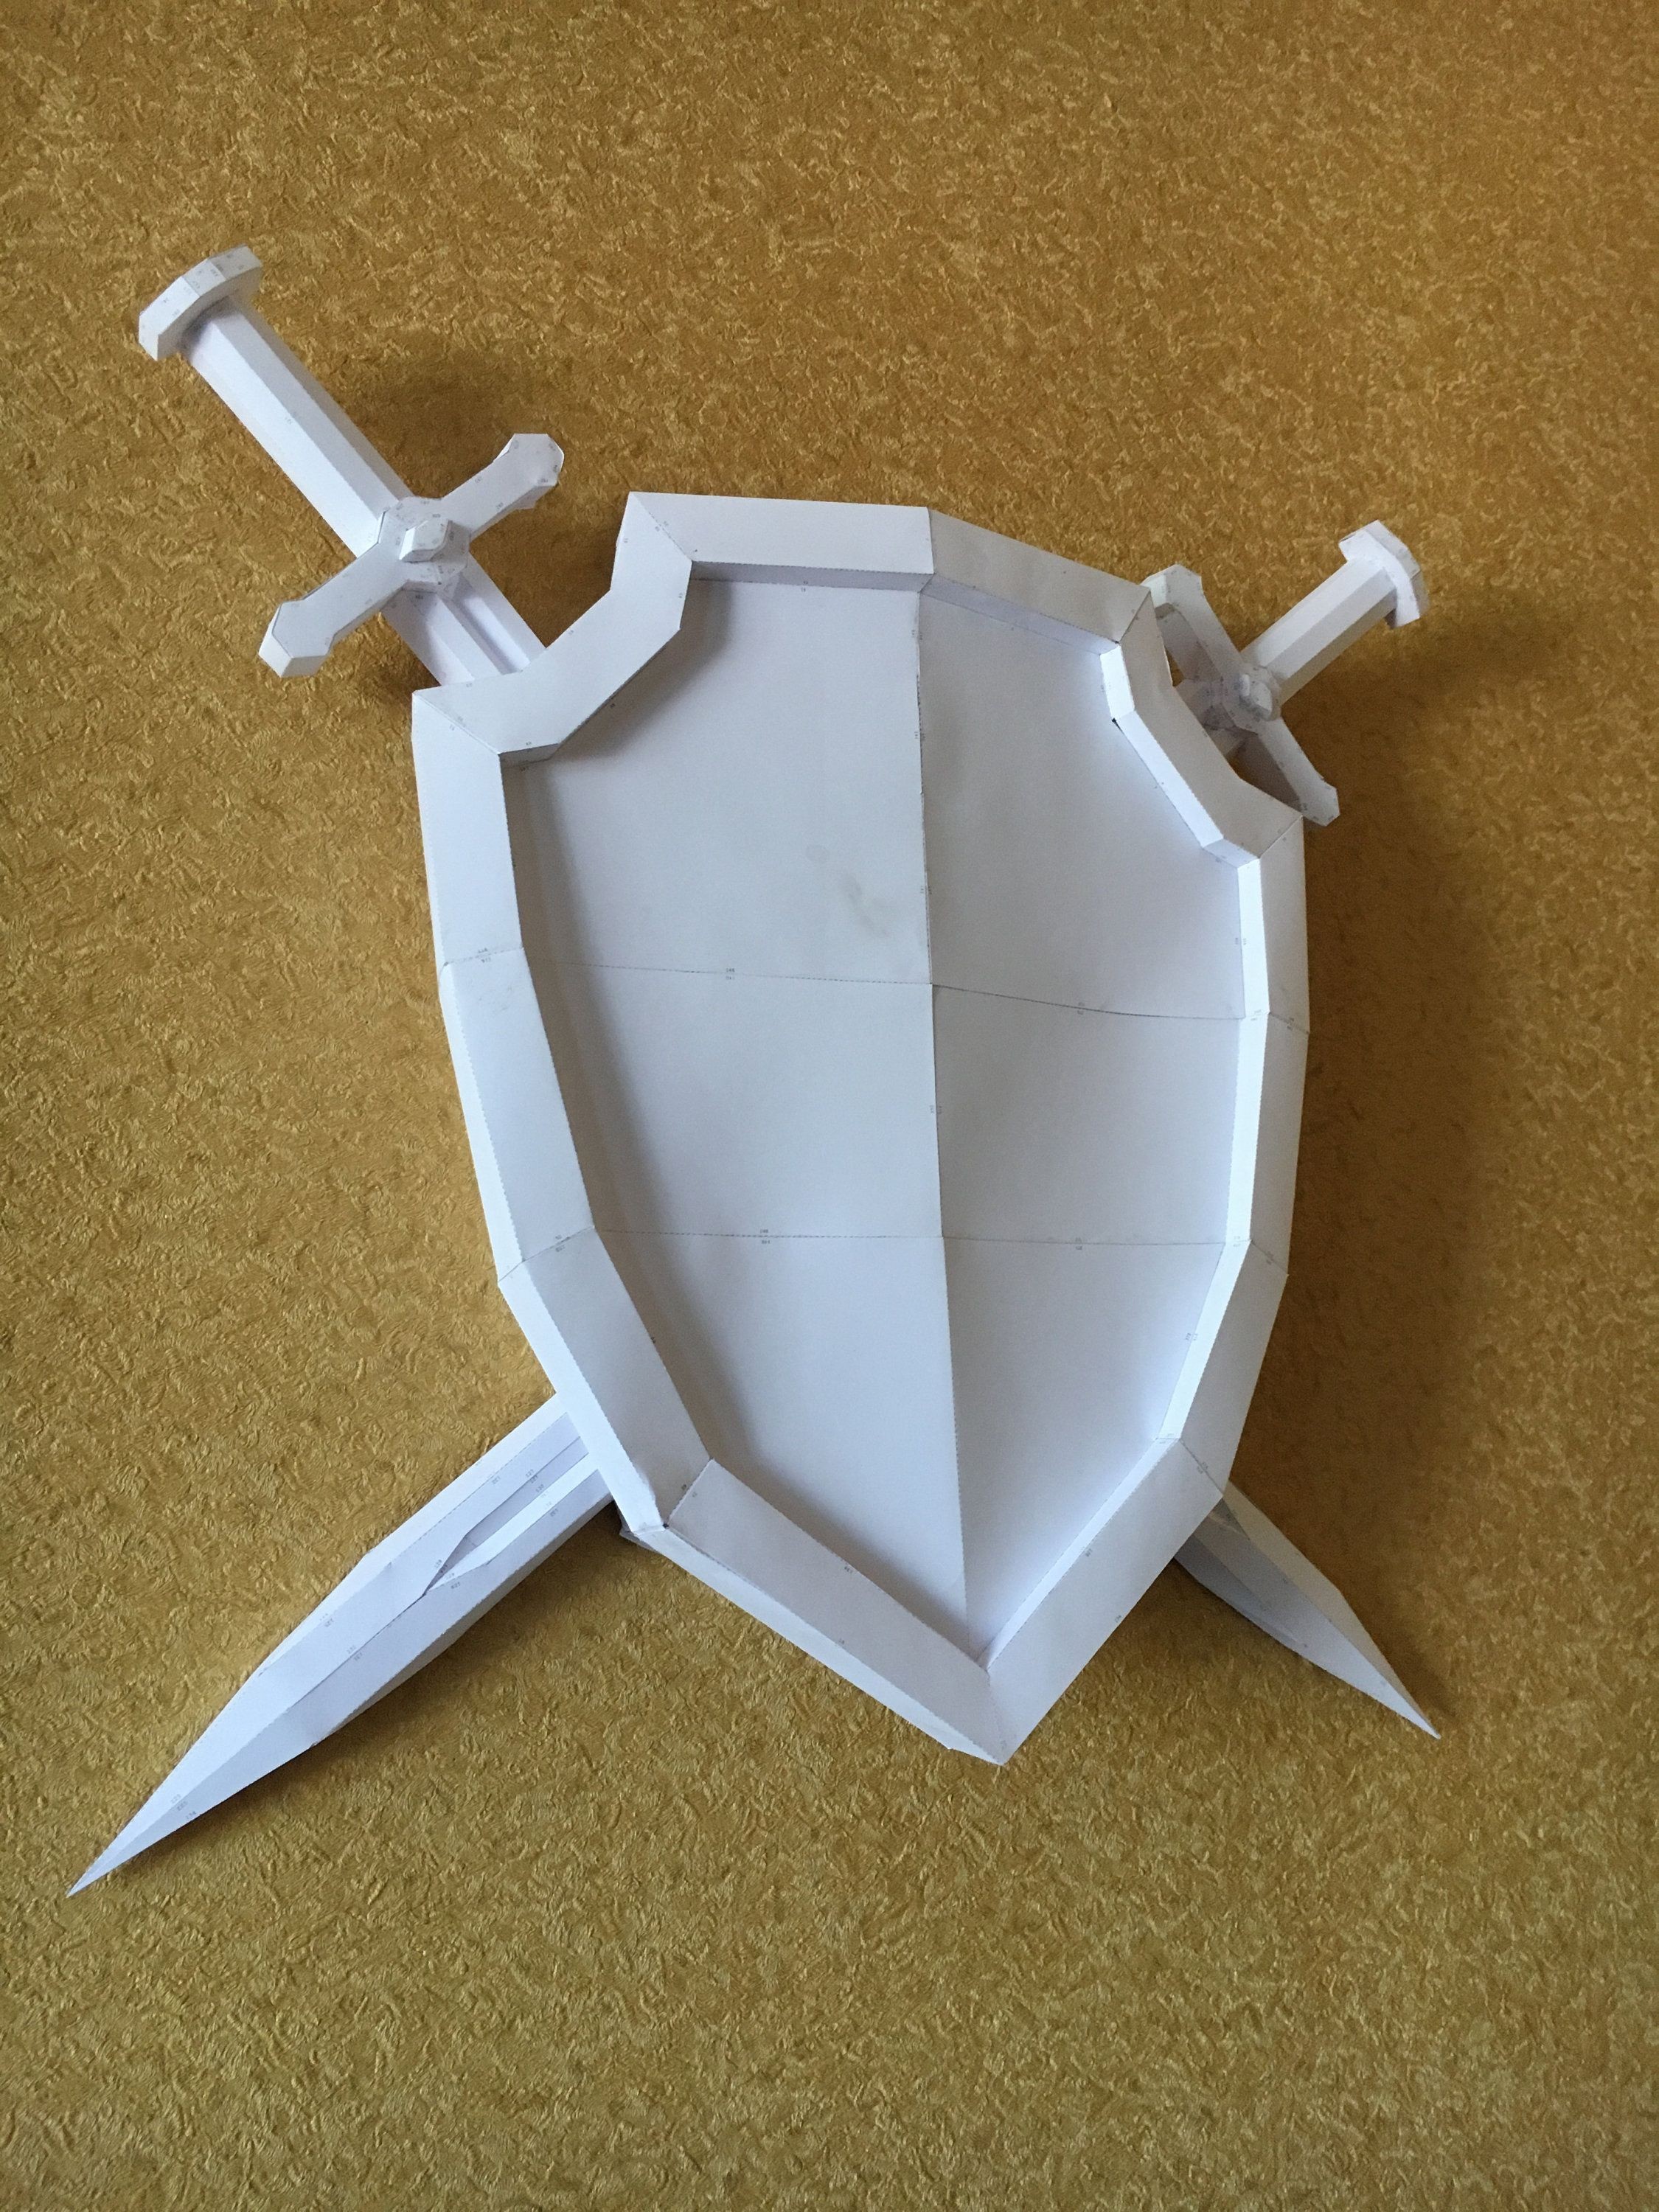 Black Rock Shooter Papercraft Sword Shield Diy Papercraft Model ÐÑÐ¼Ð°Ð¶Ð½ÑÐµ Ð¸Ð·Ð´ÐµÐ Ð¸Ñ